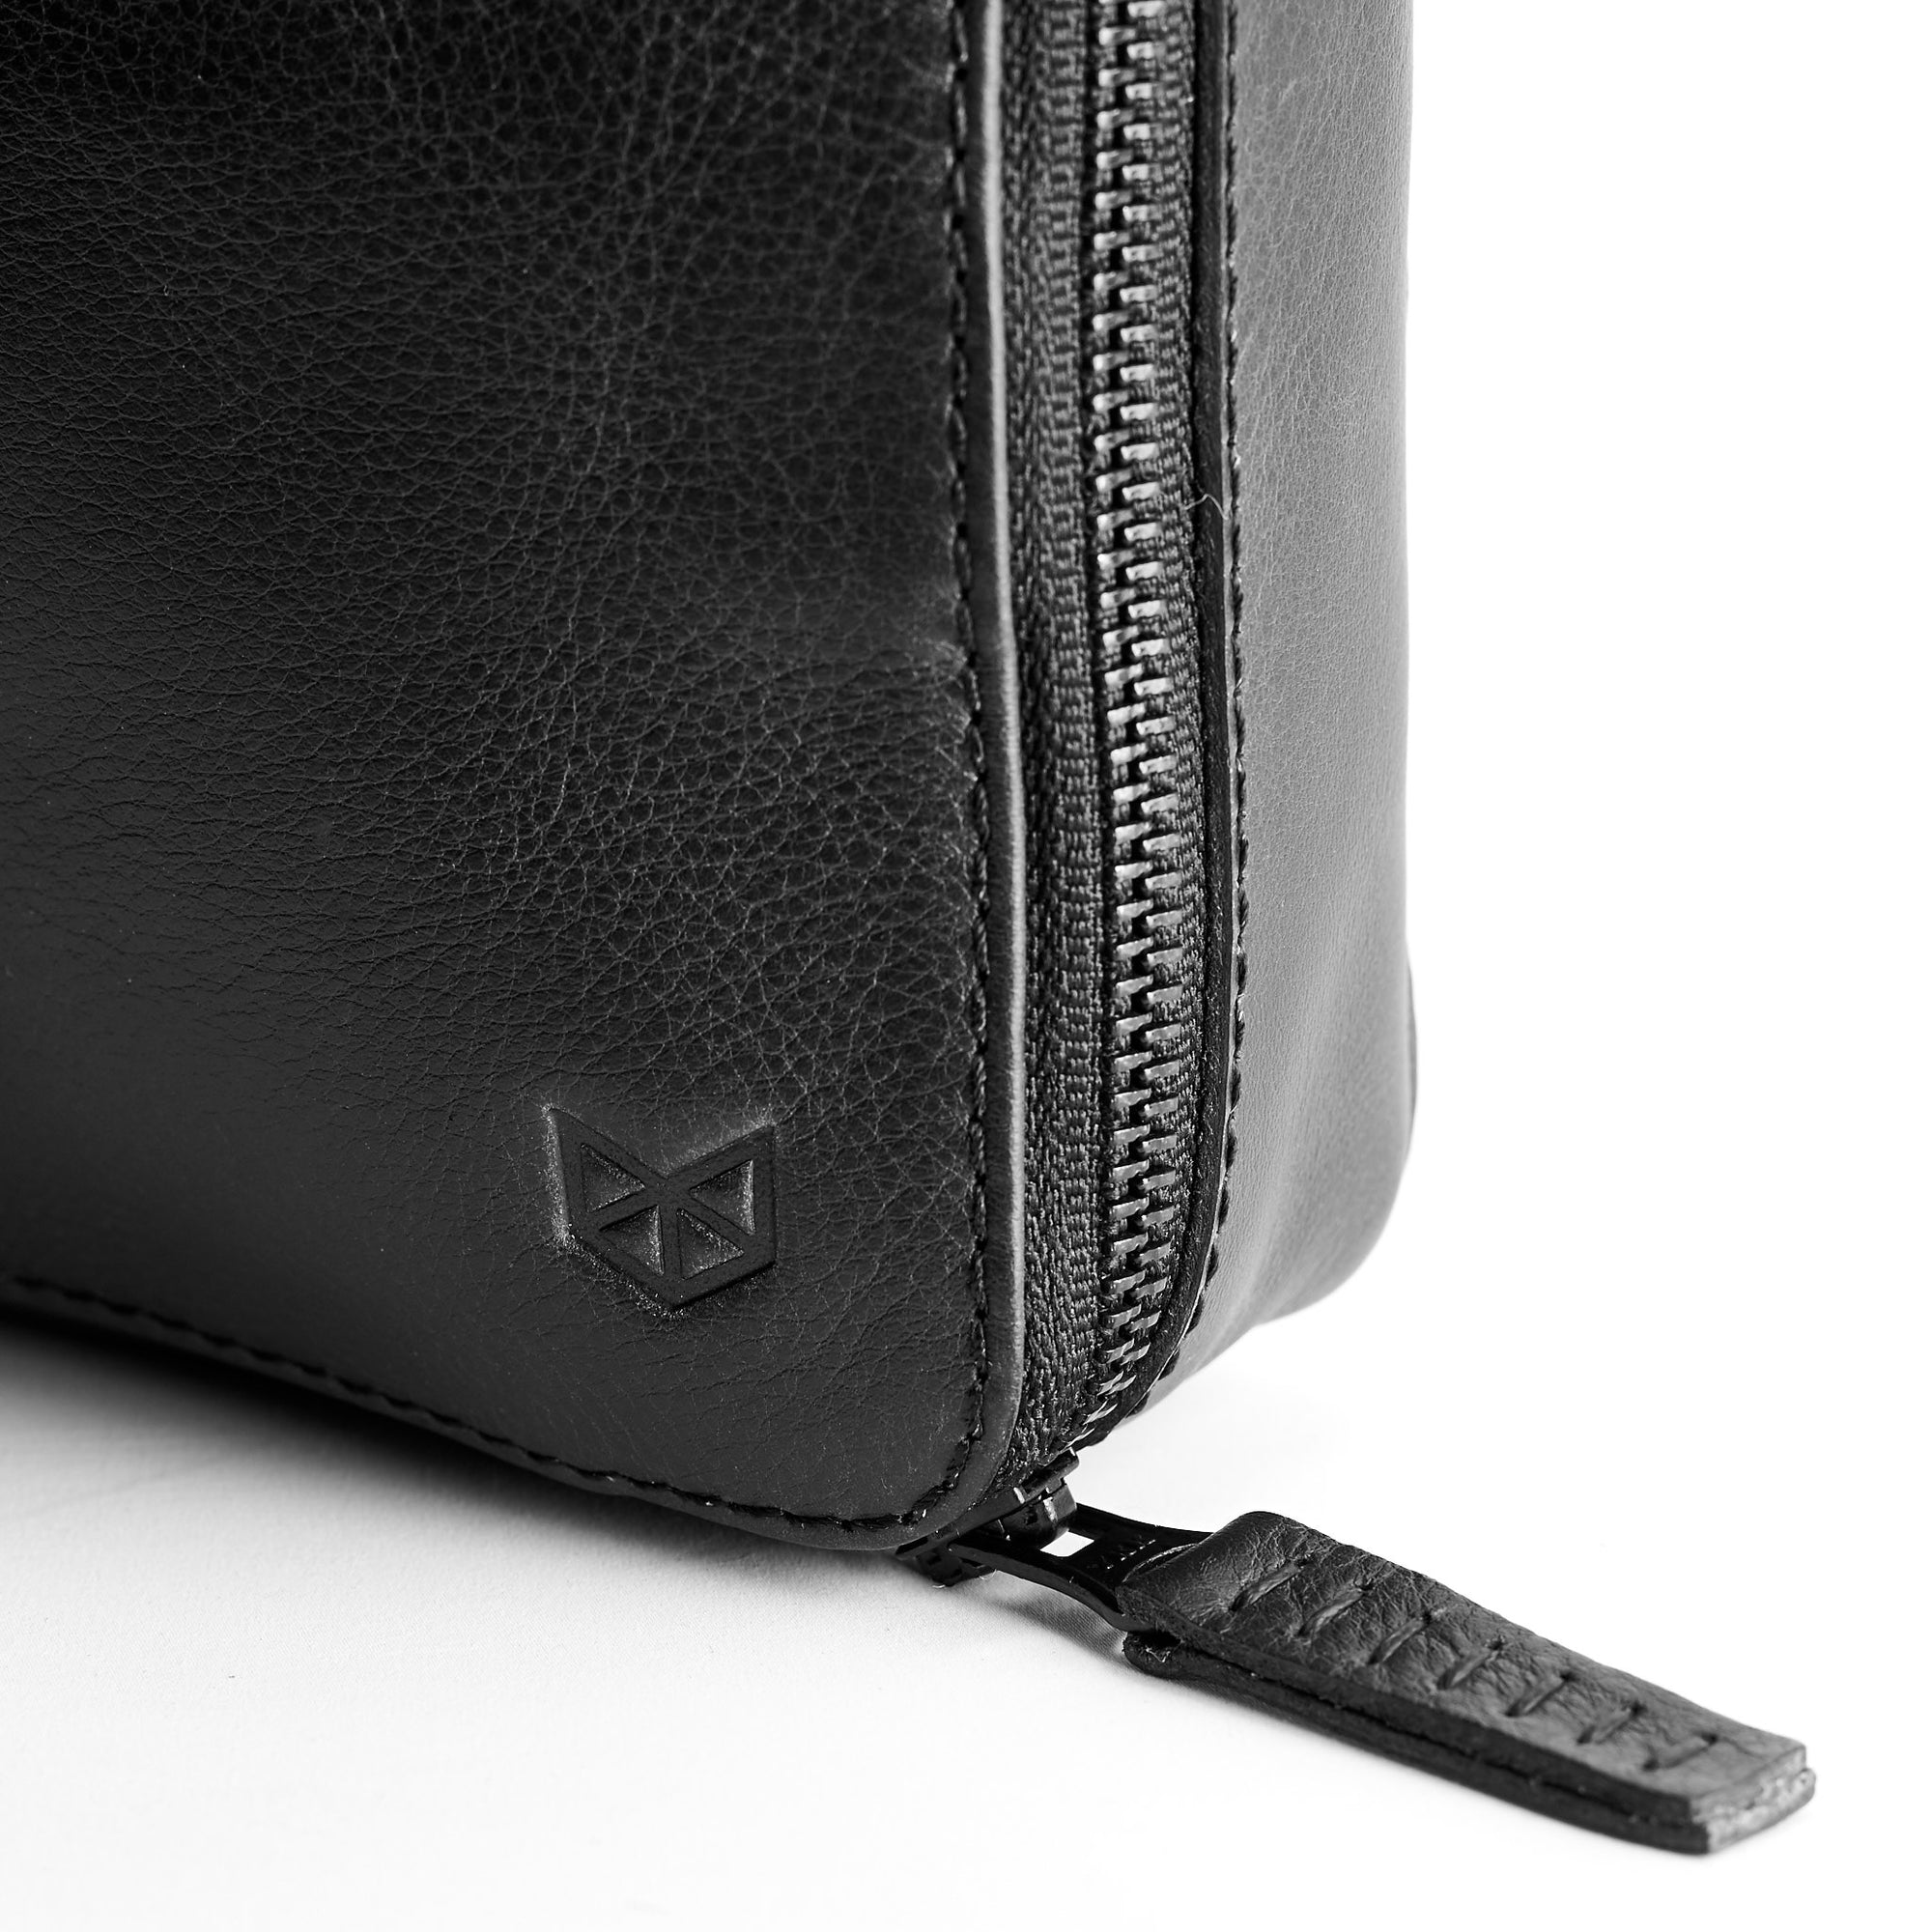 Detail from metallic zipper. leather gadget bag, tech dopp kit, electronic organizer. Fits iPad Pro with Apple pencil.